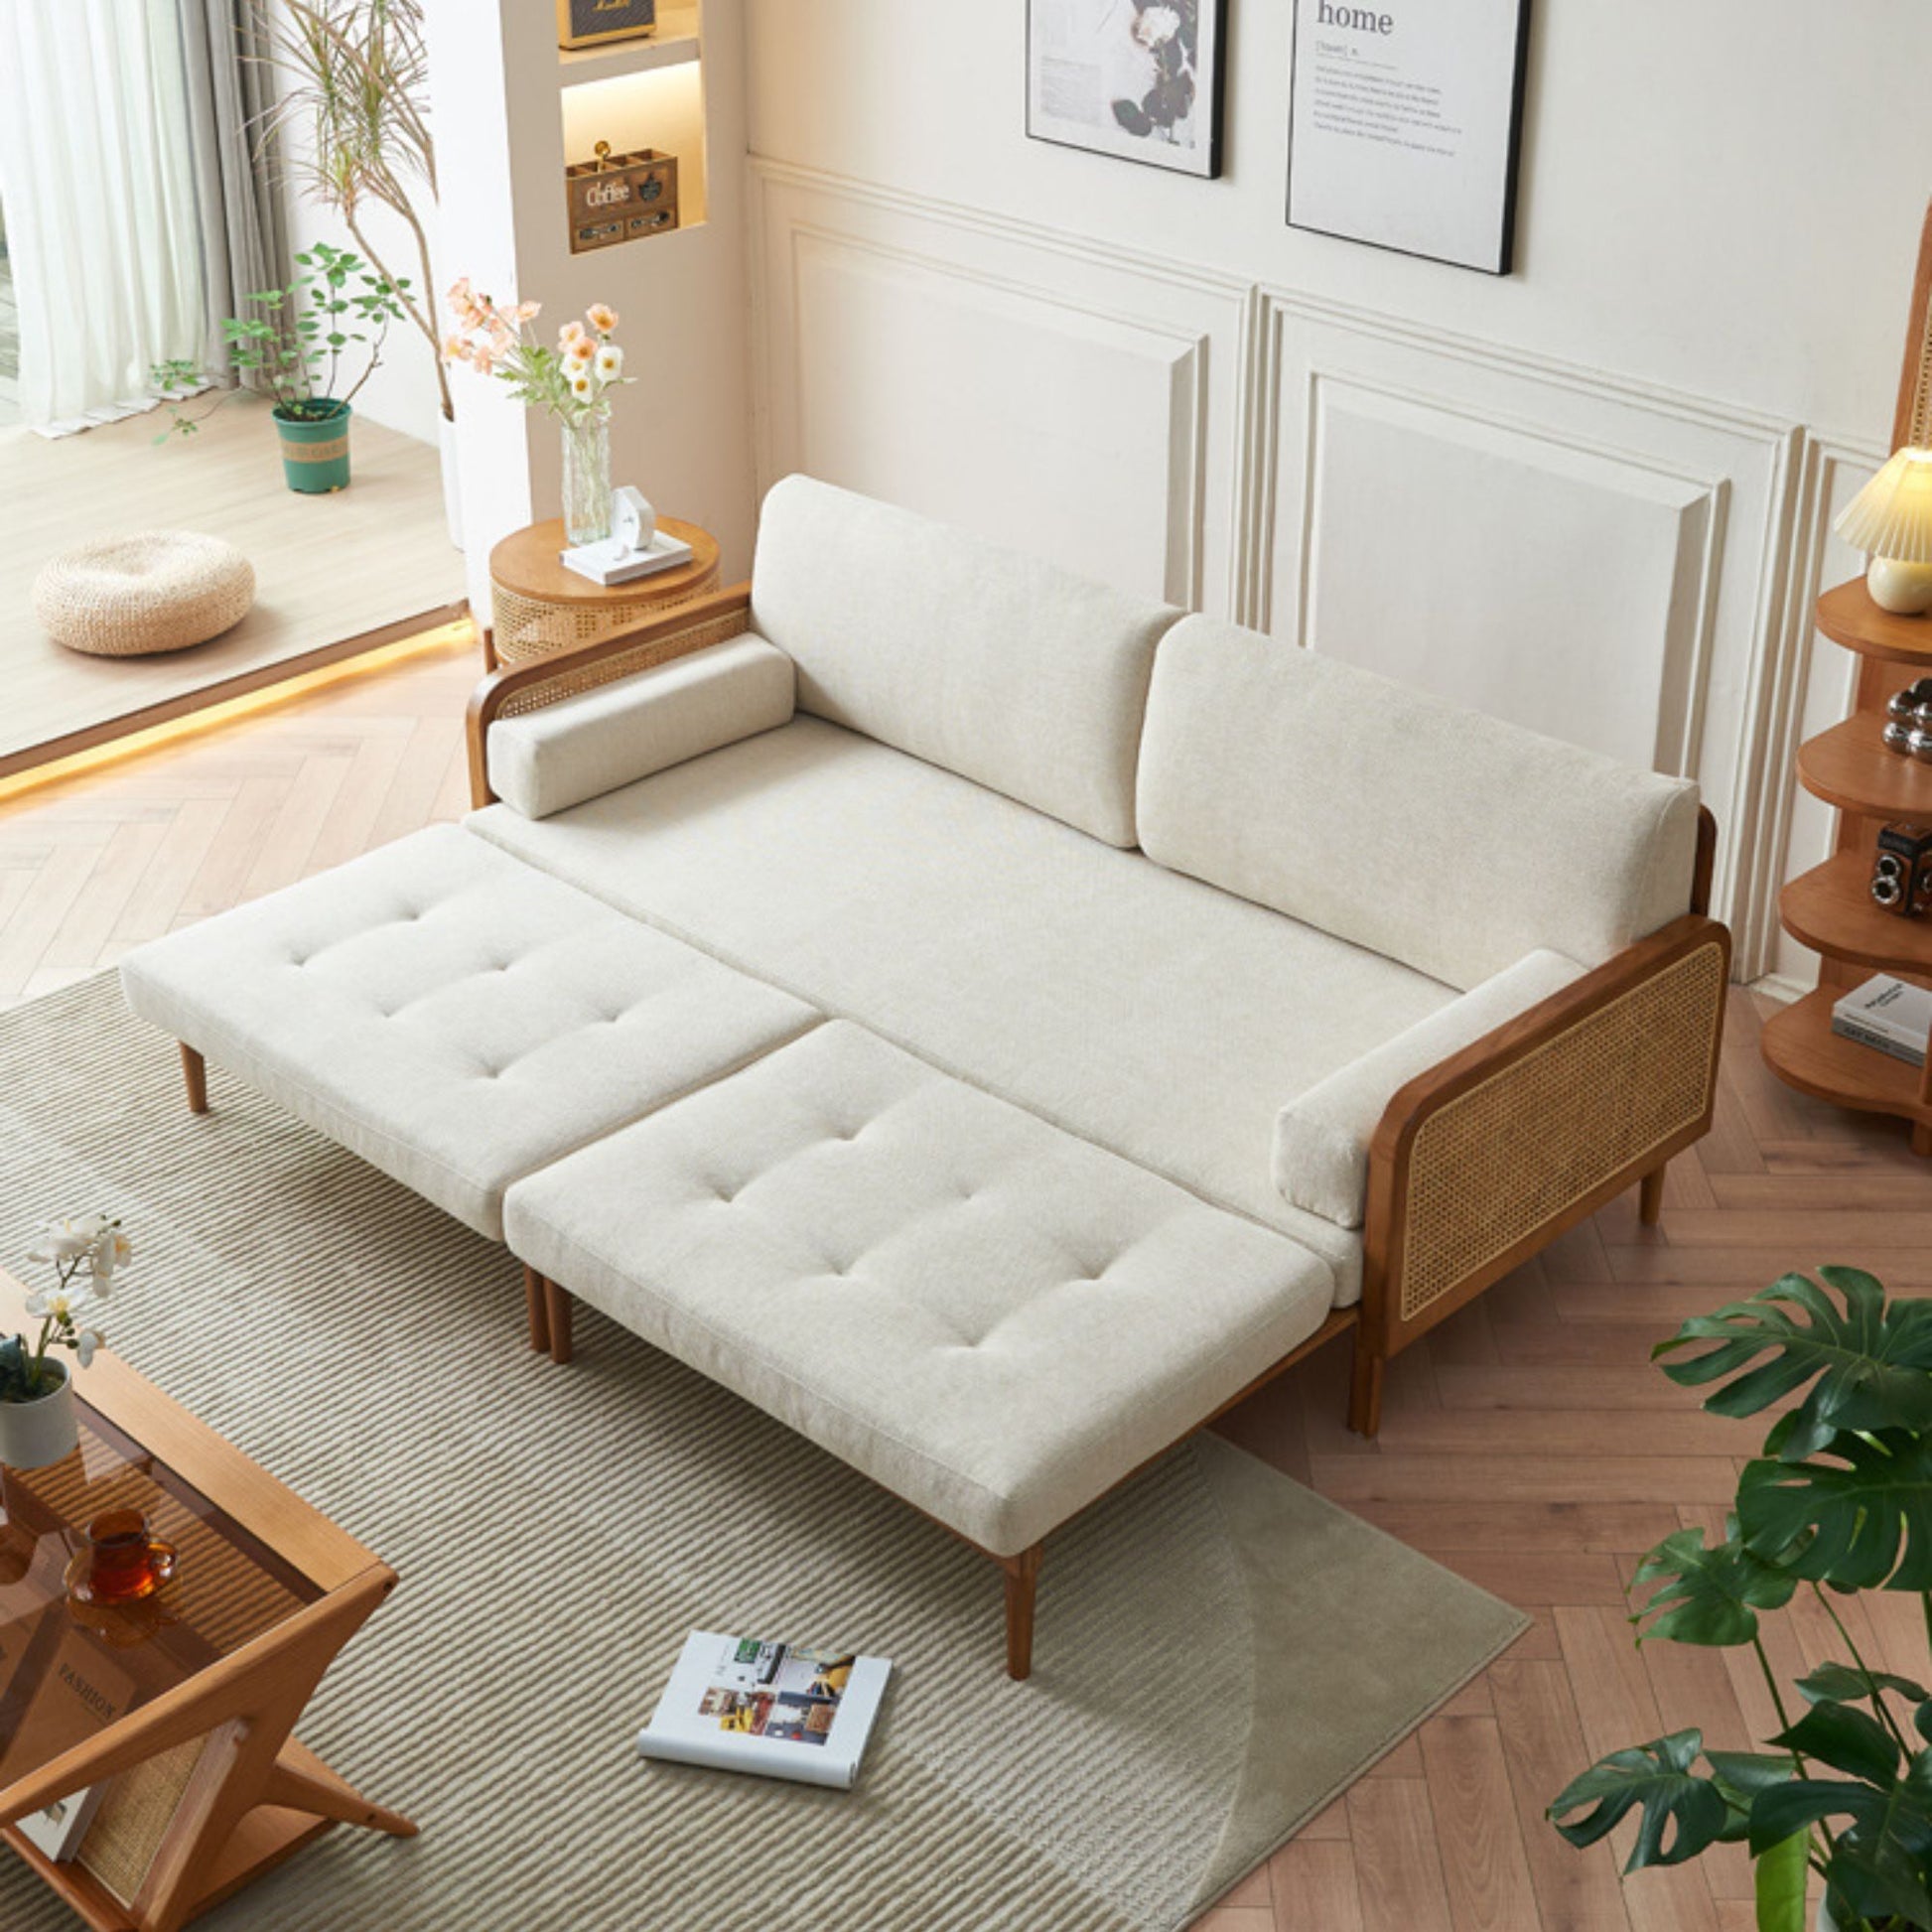 Cane white fabric sofa bed